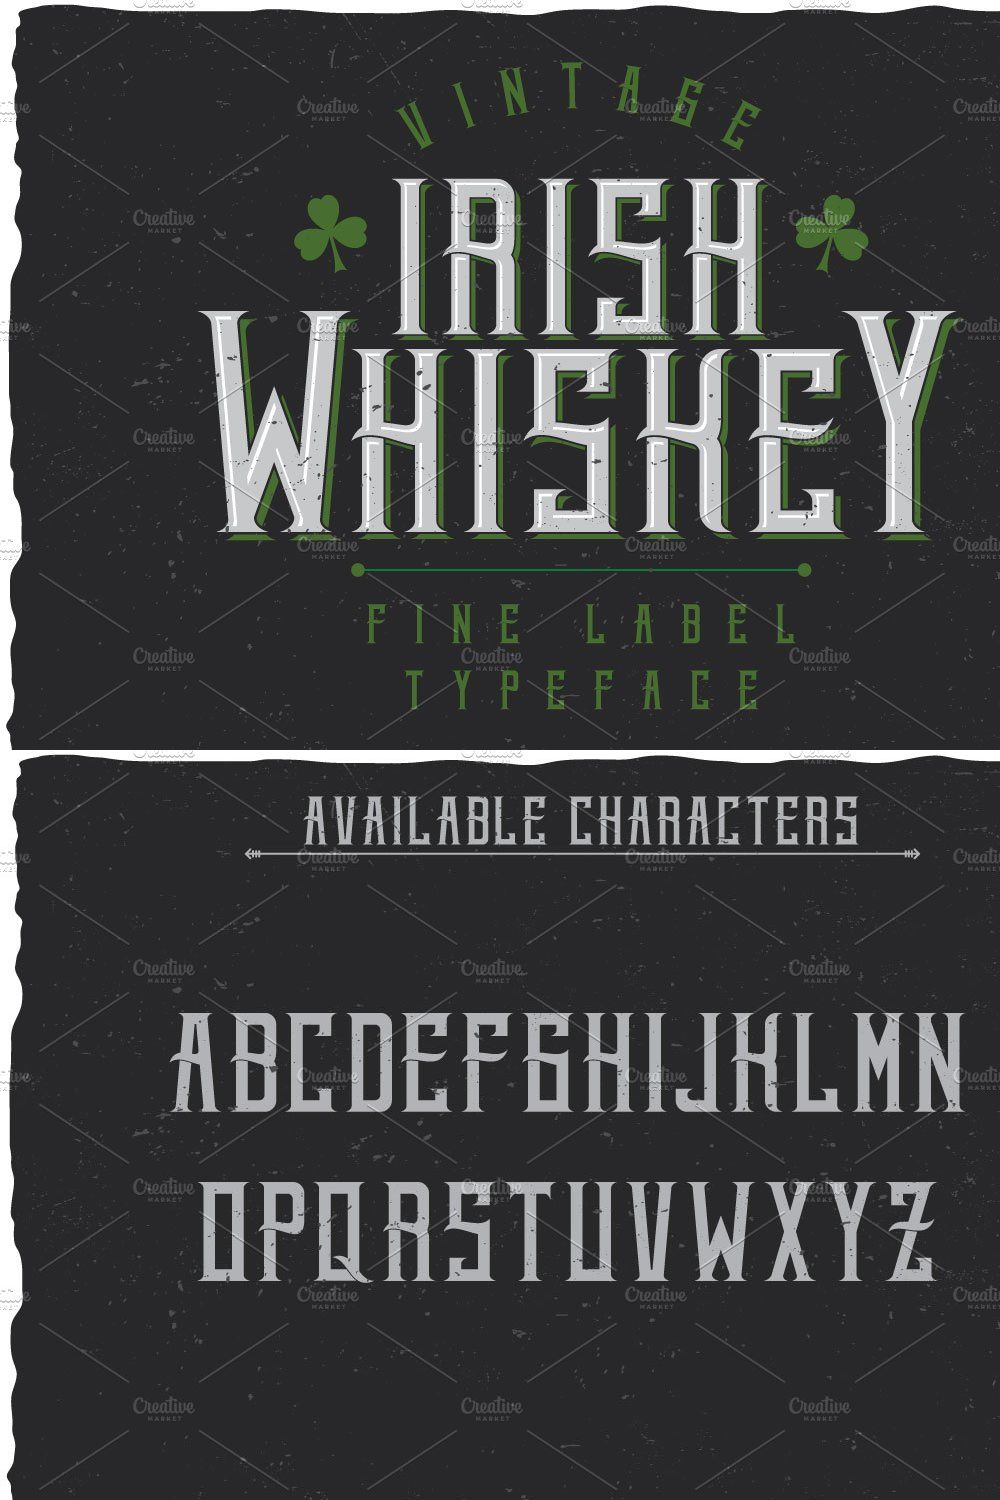 Irish Whiskey Vintage Label Typeface pinterest preview image.